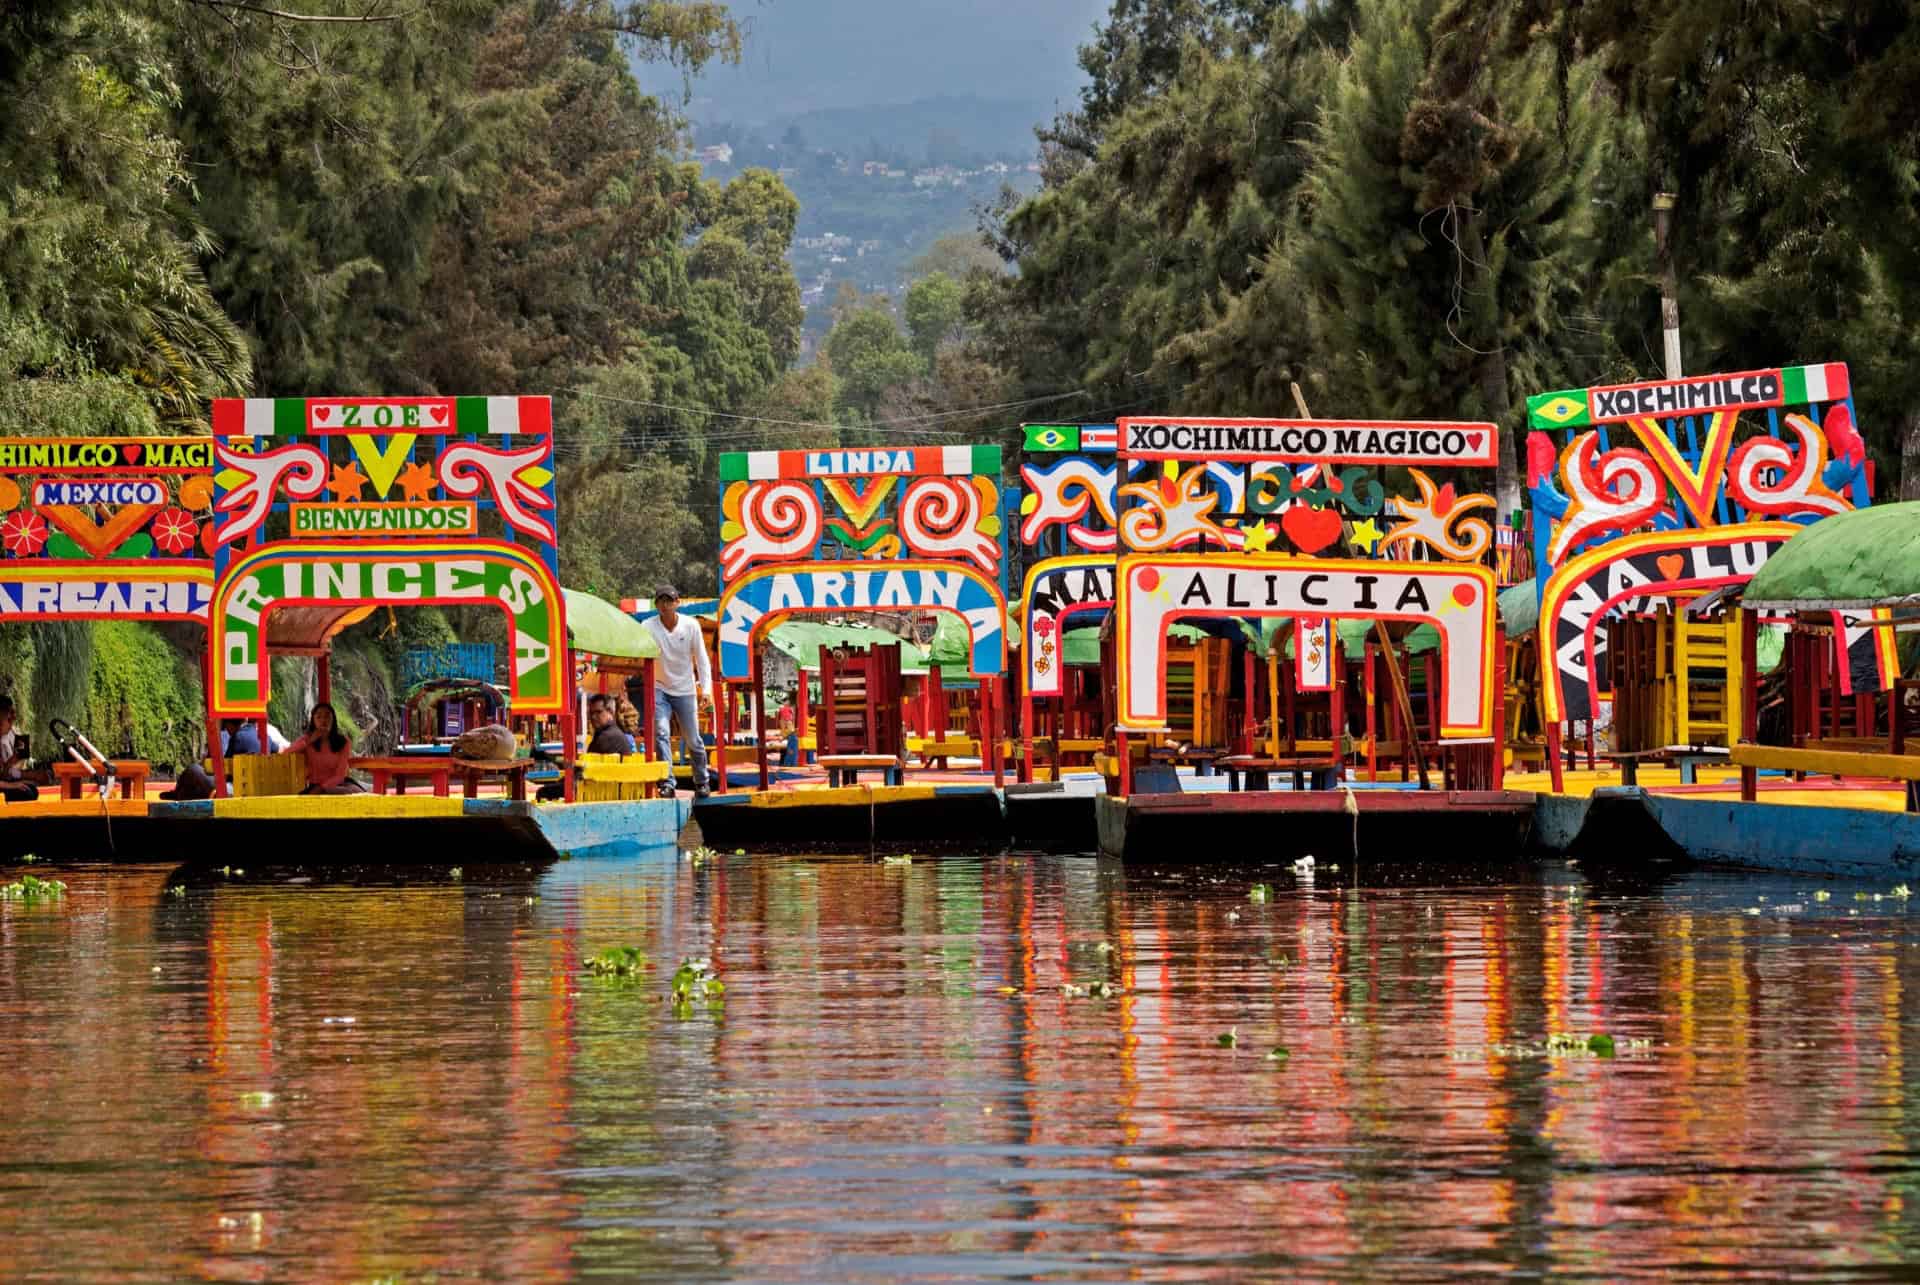 xochimilco canal